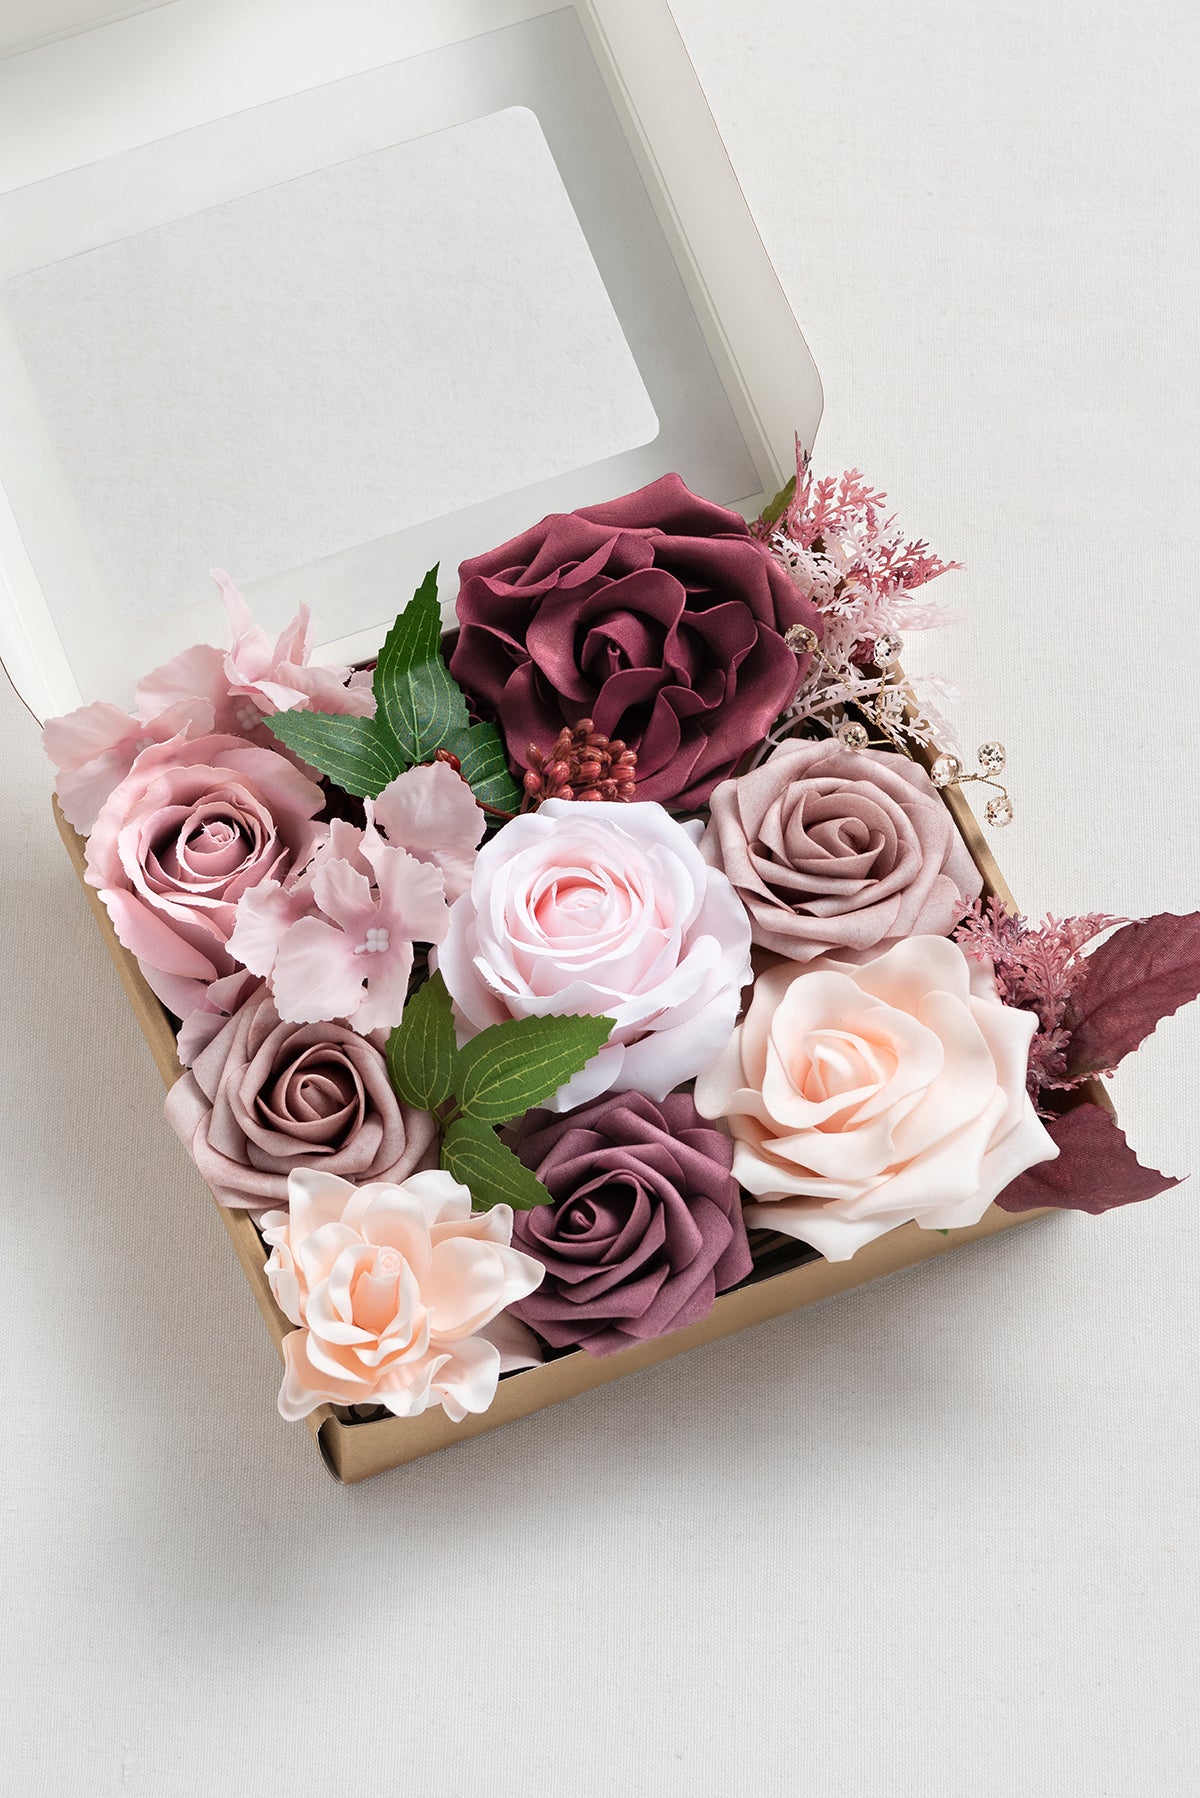 Sample Box in Vintage Rose & Blush